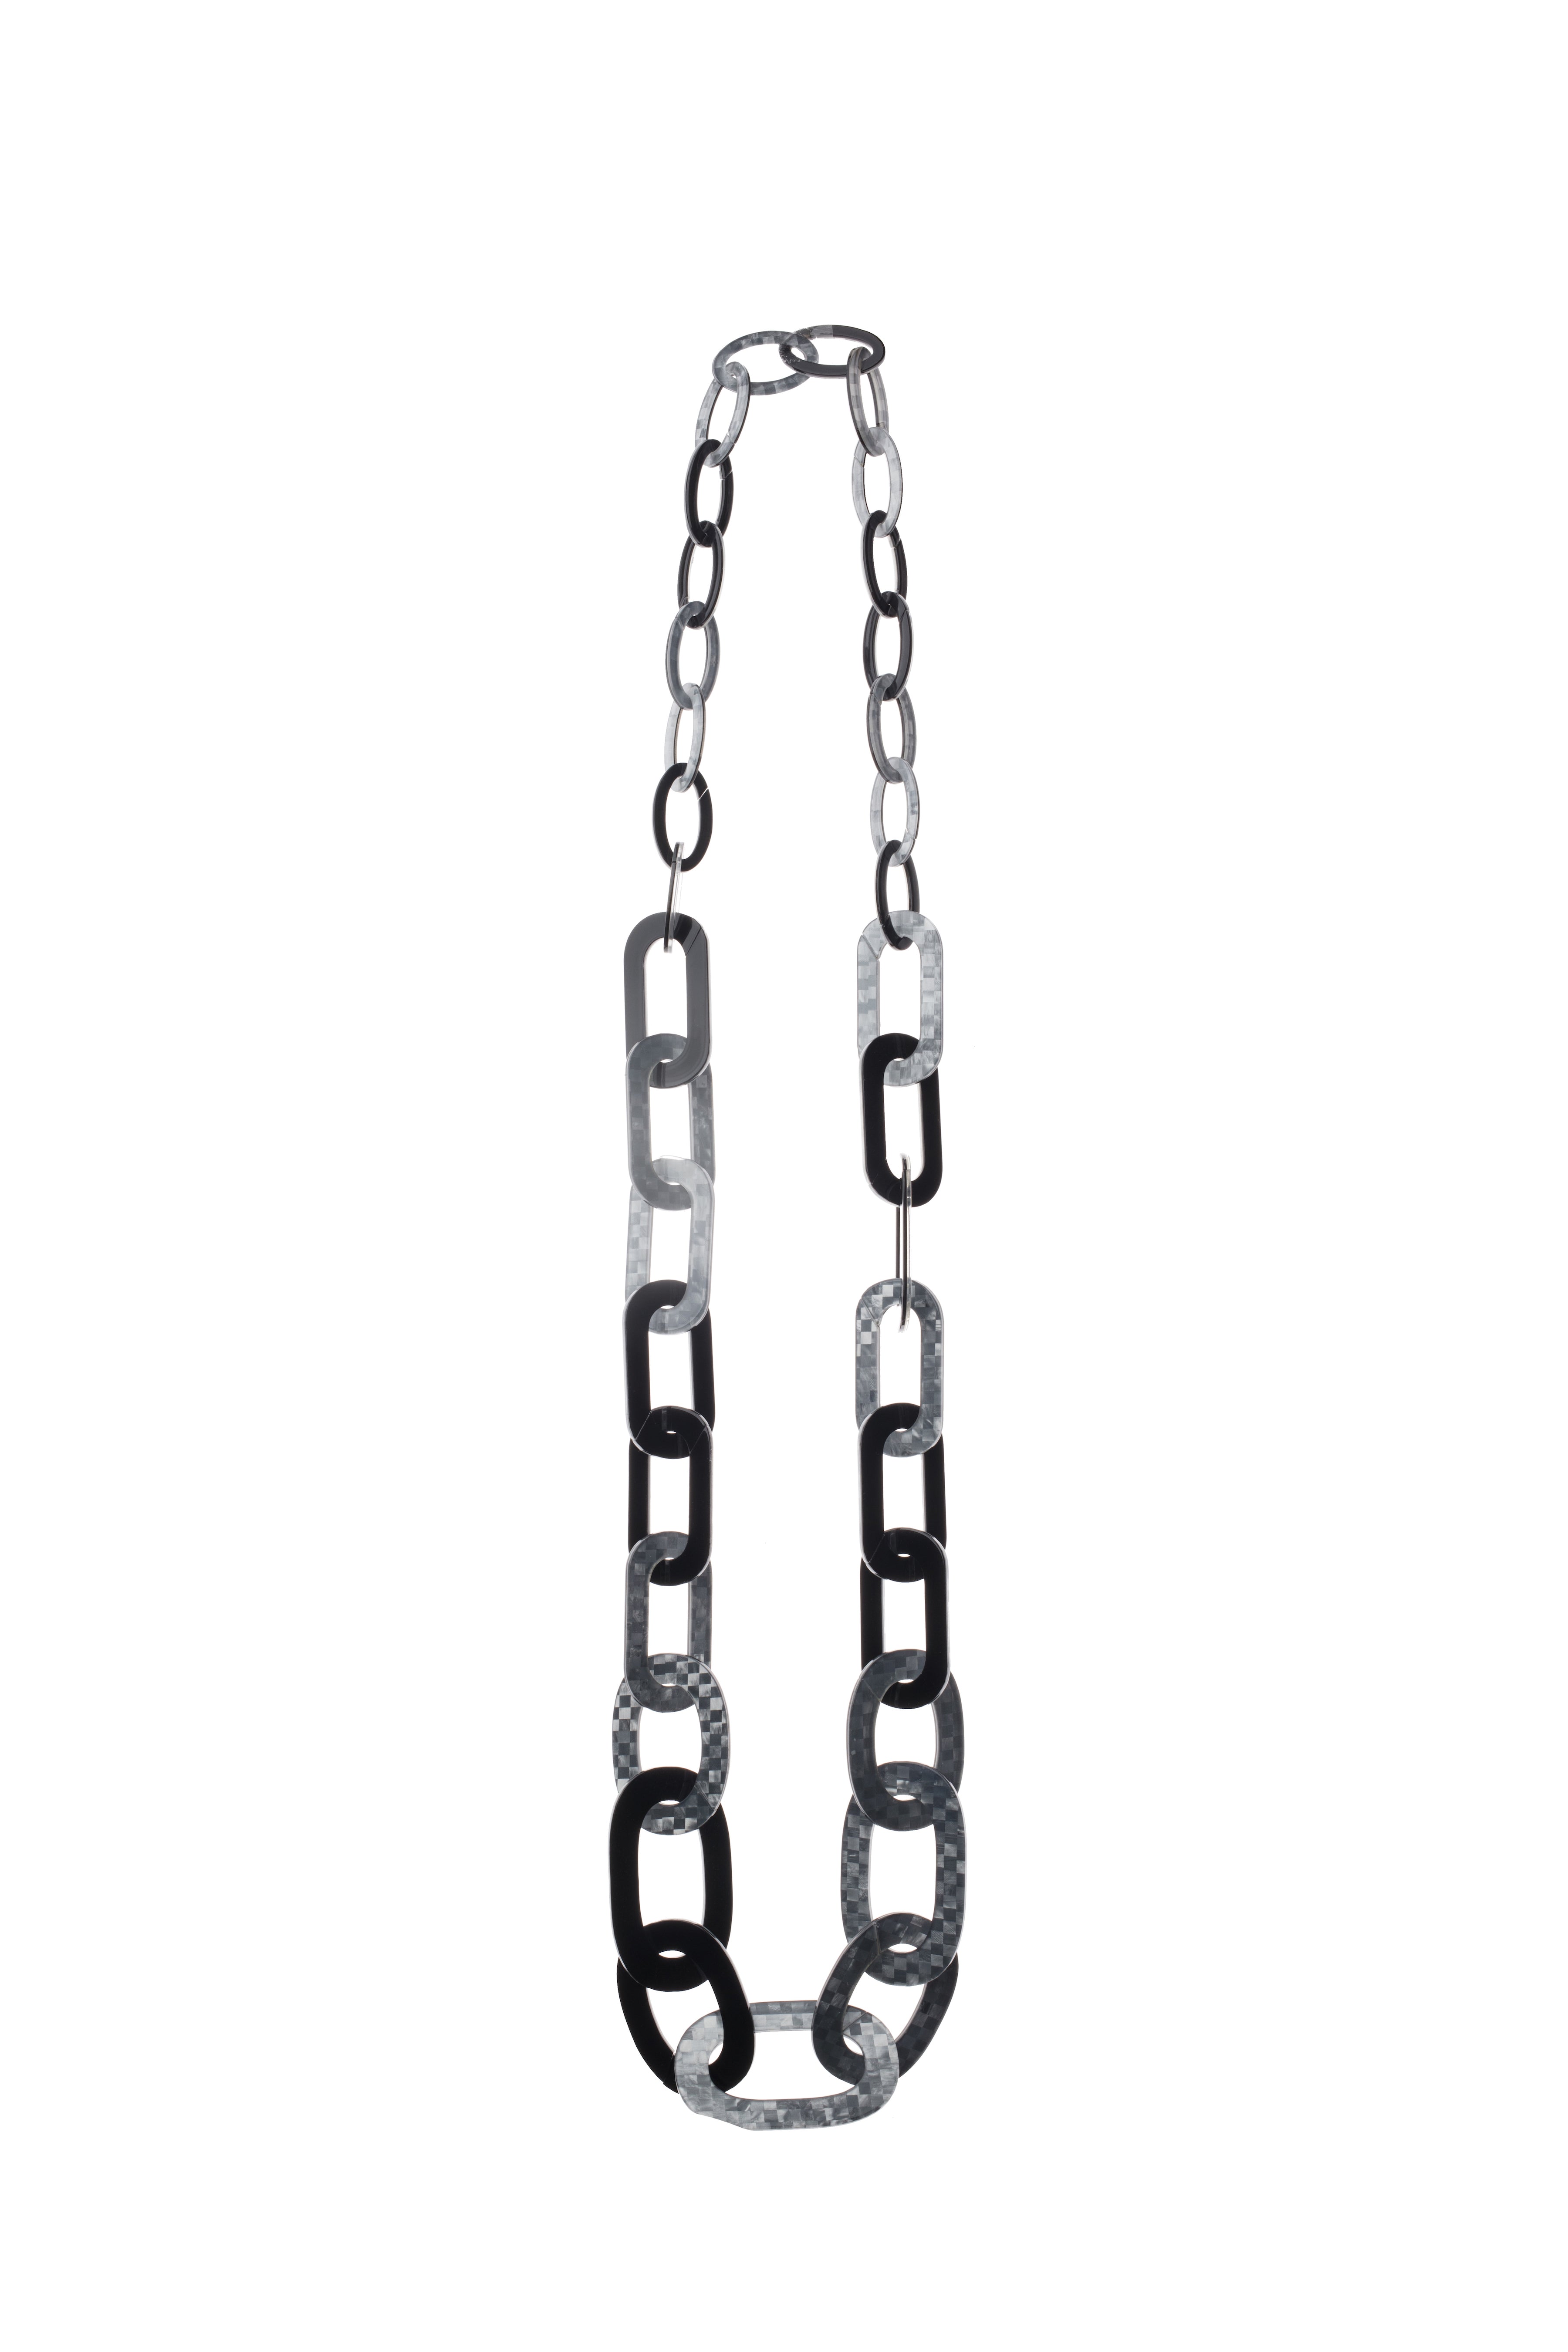 Retro Style Acrylic Link Necklace